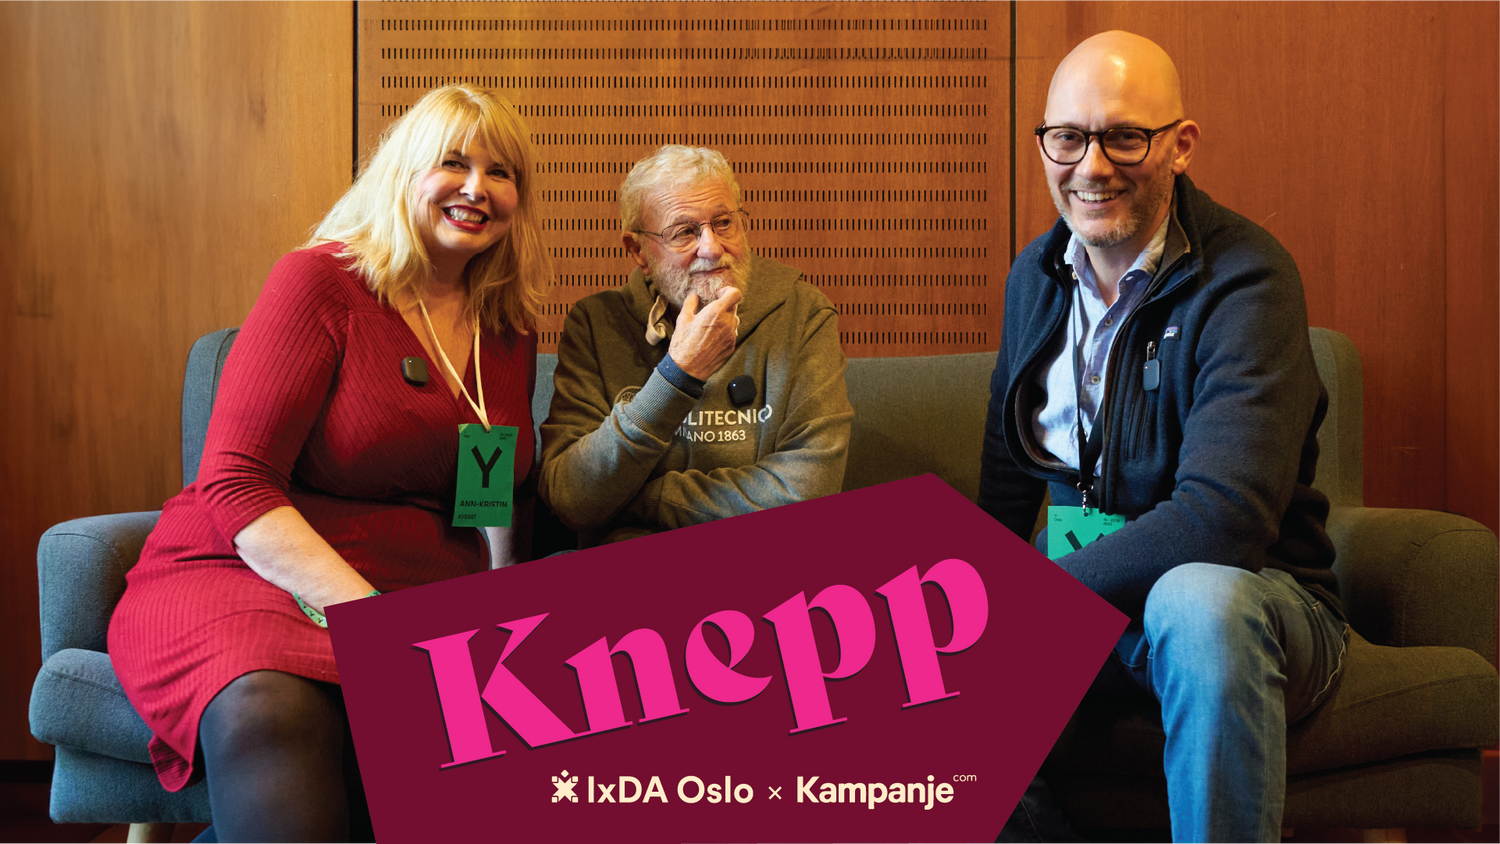 Ann-Kristin Hansen, Don Norman and Fredrik Matheson recording an episode of Knepp